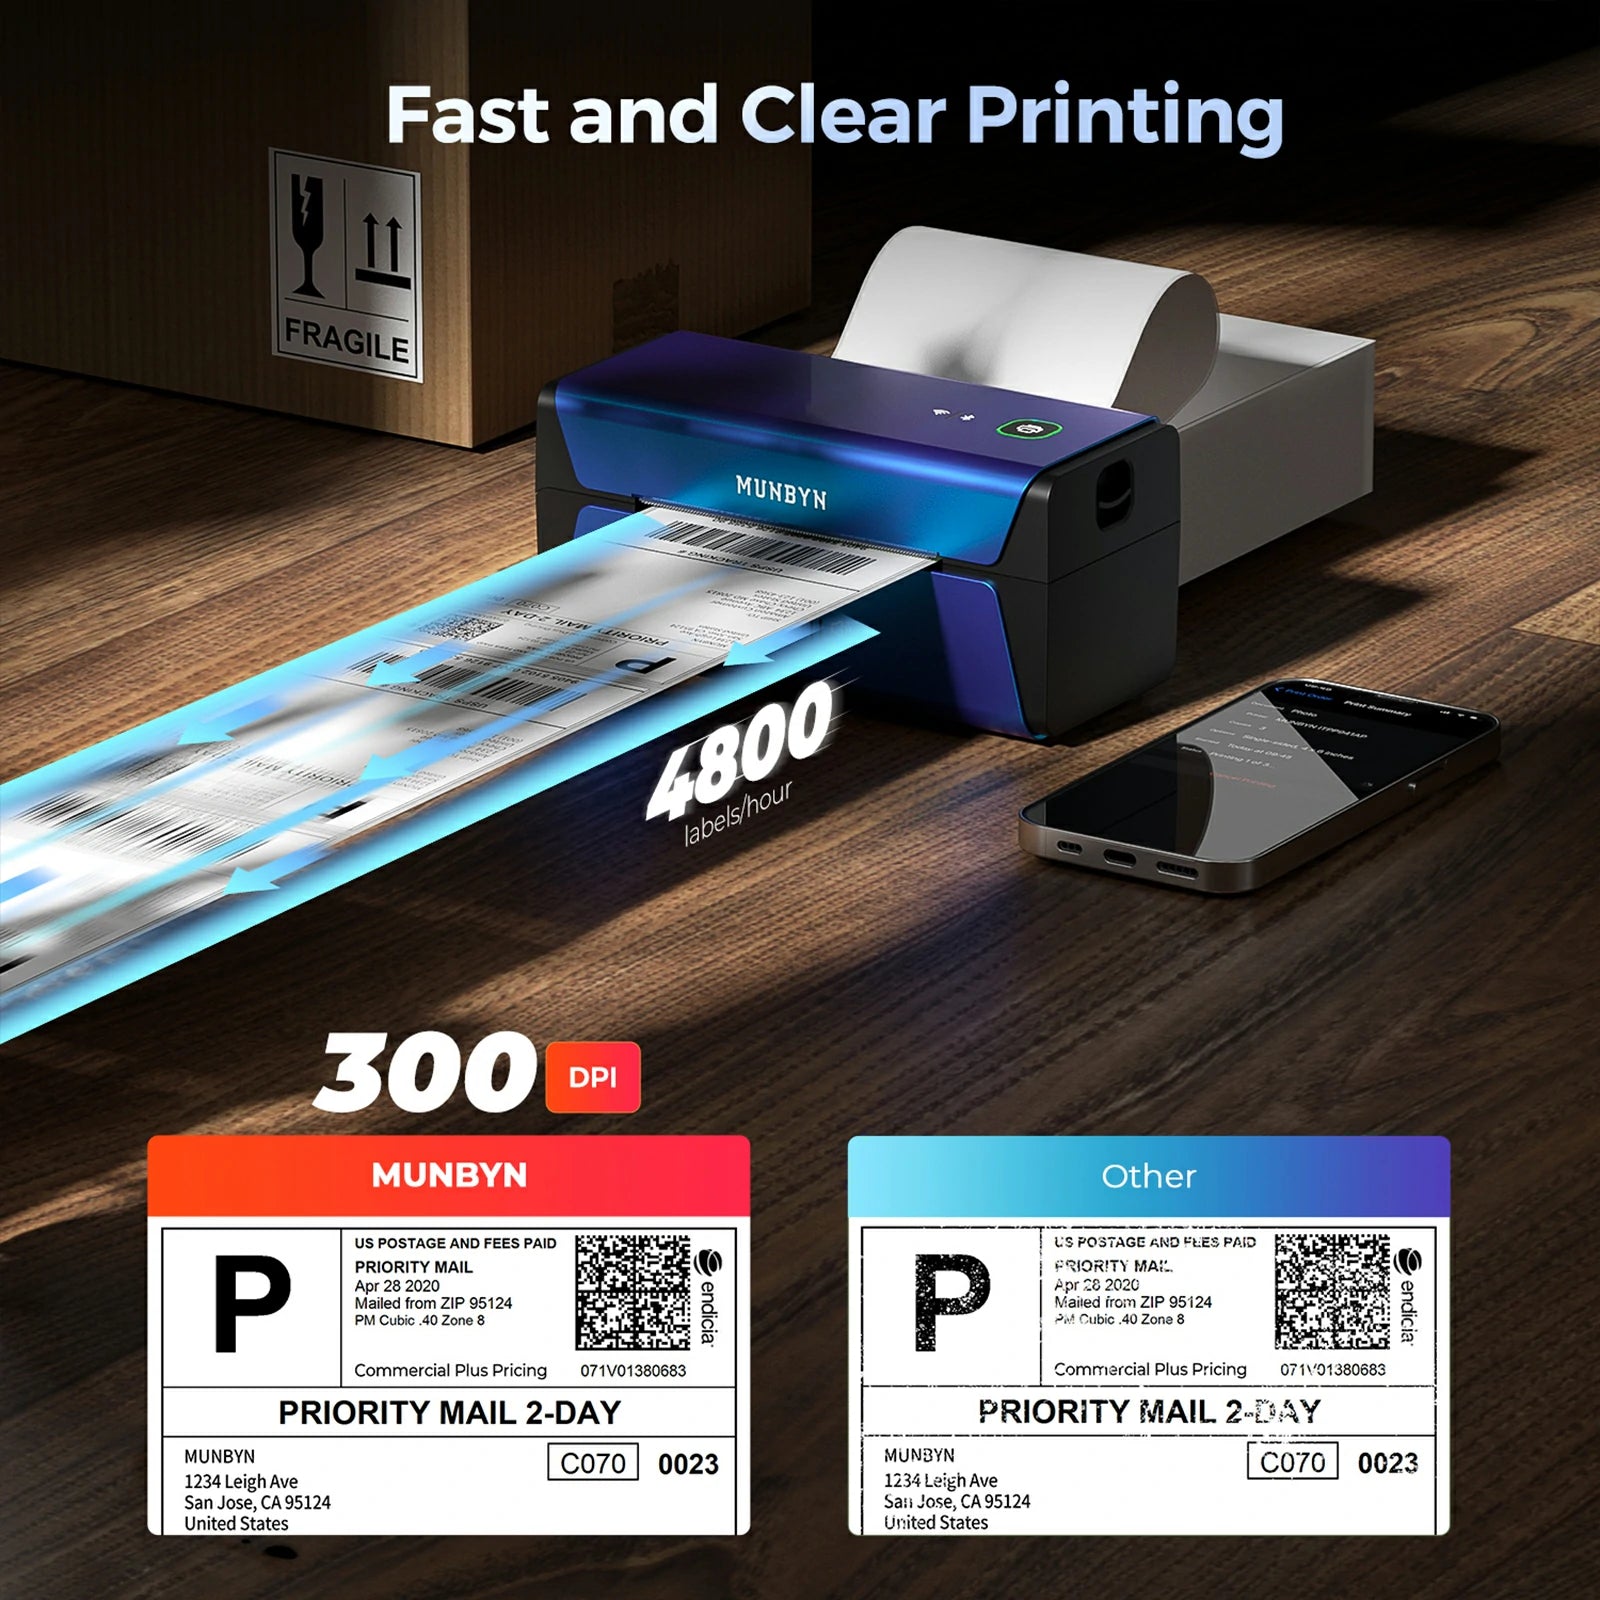 MUNBYN Announces Launch of RW401AP Wireless Label Printer